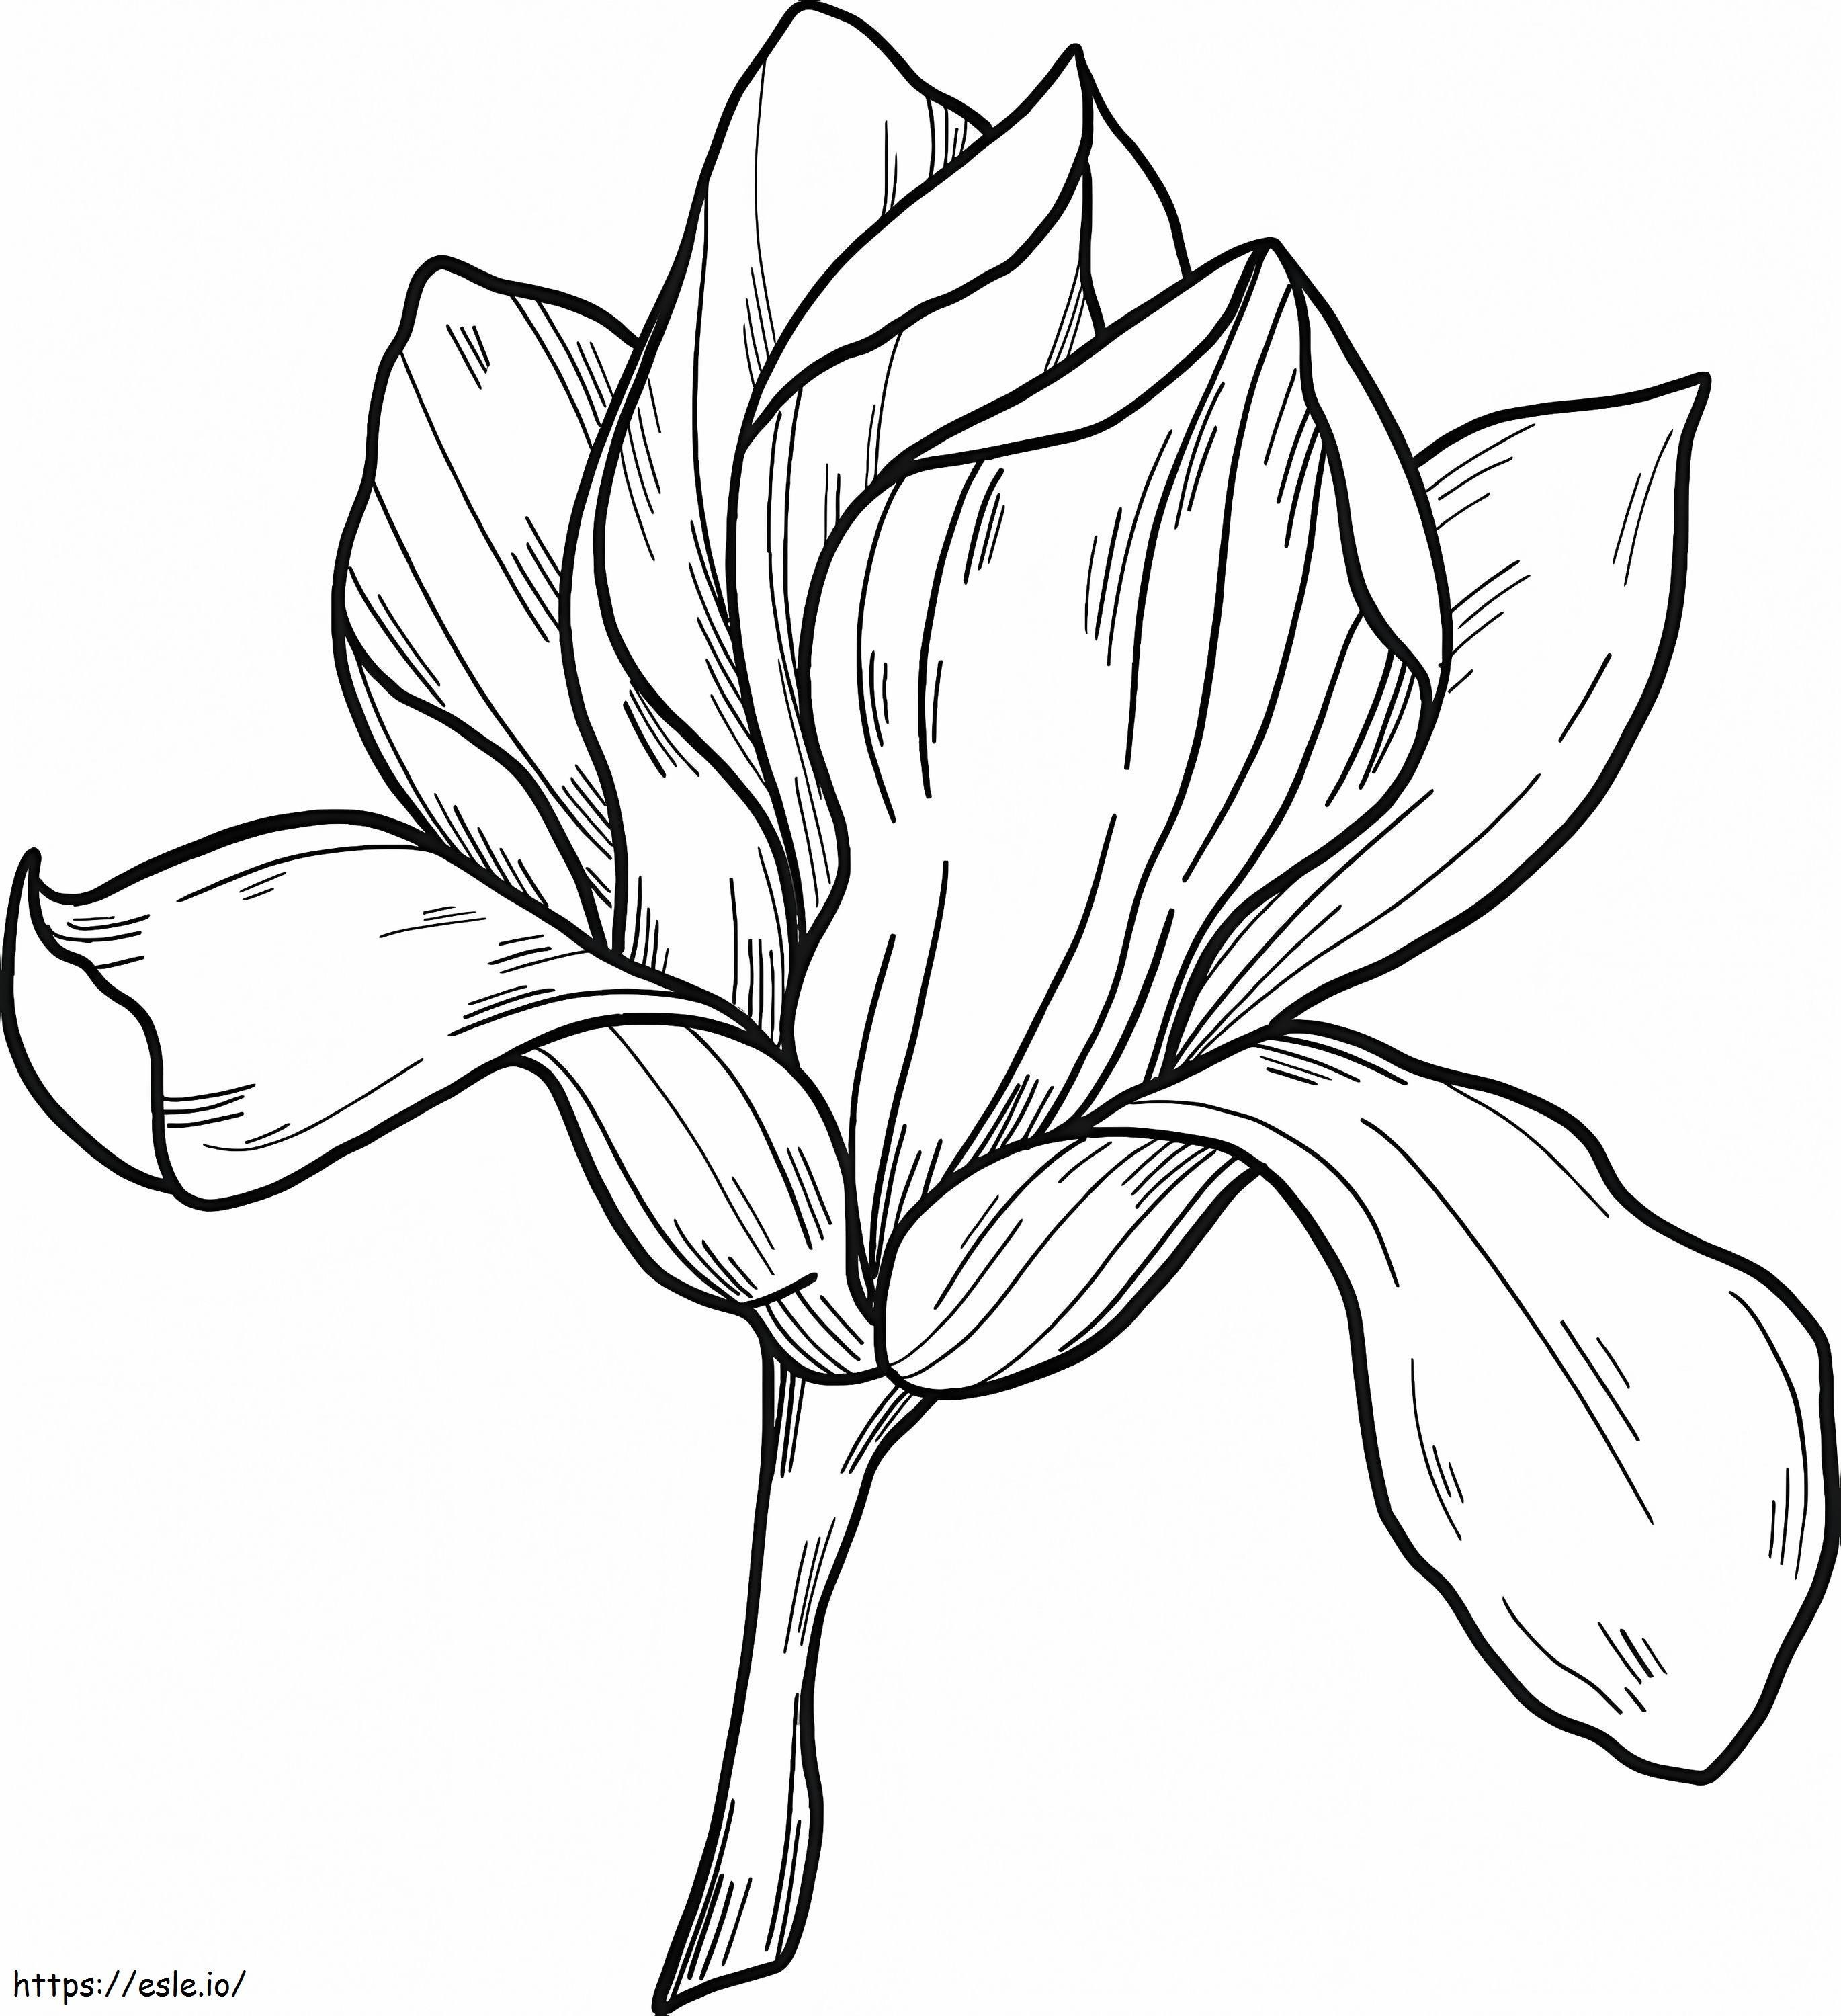 Magnolienblüte 9 ausmalbilder